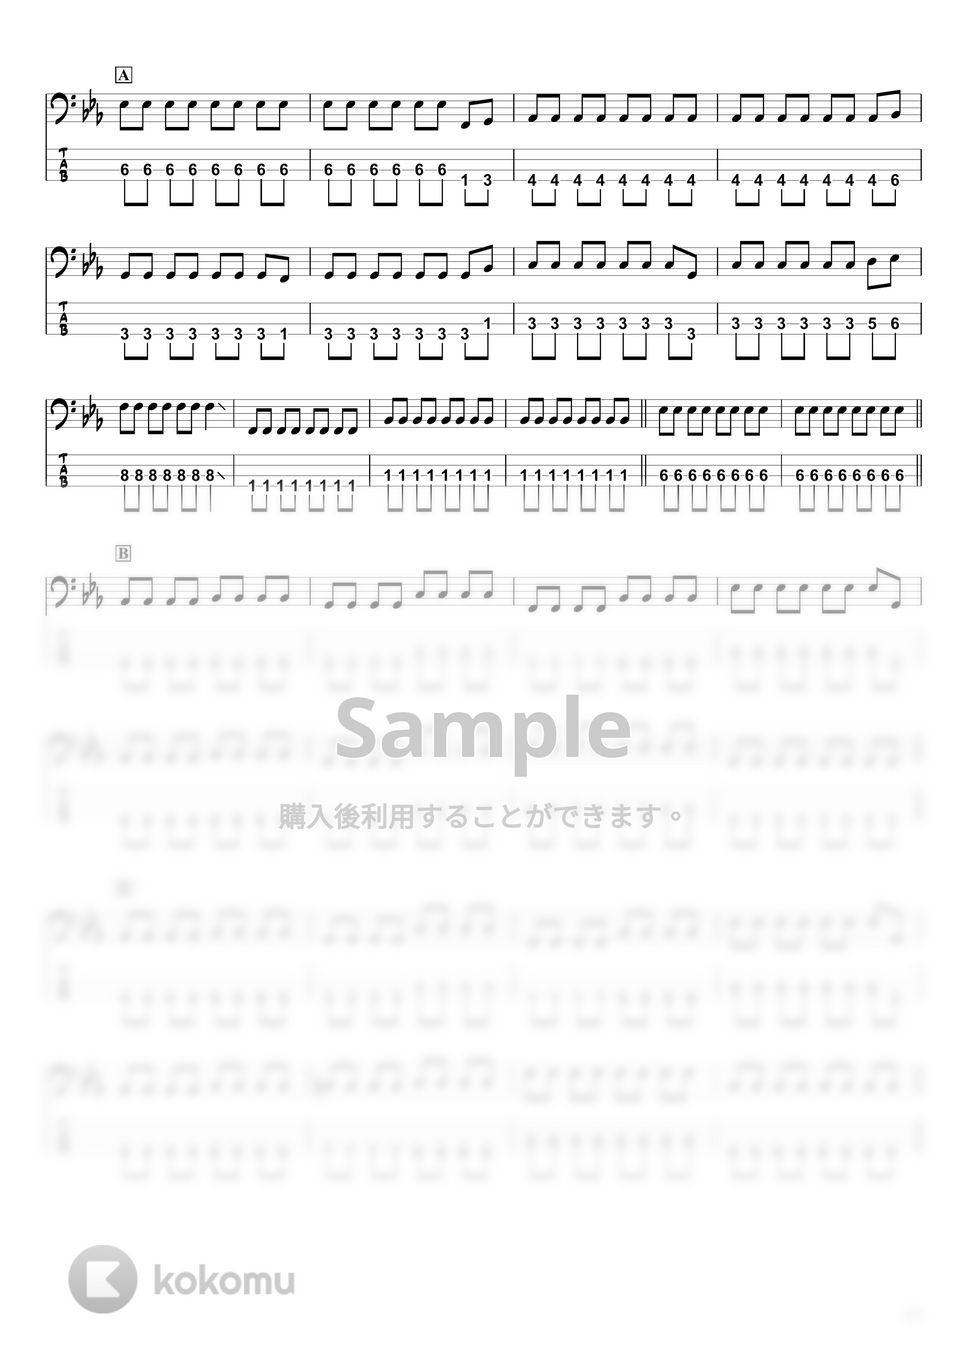 Official髭男dism - ホワイトノイズ (ベースTAB譜☆4弦ベース対応) by swbass